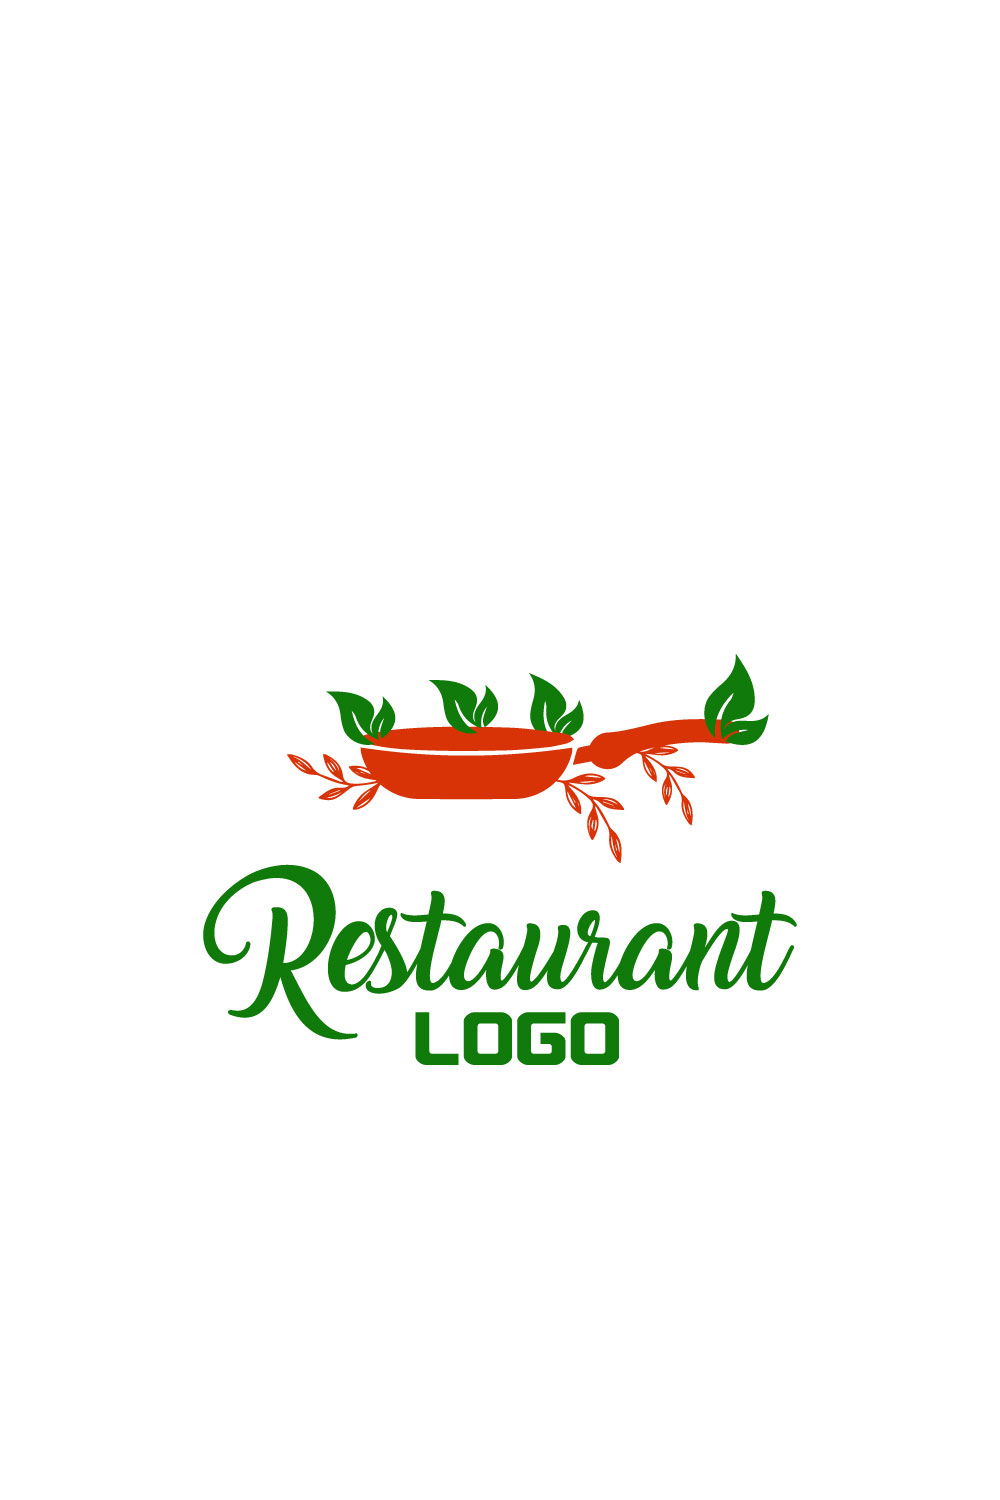 Free Restaurant Logo pinterest preview image.